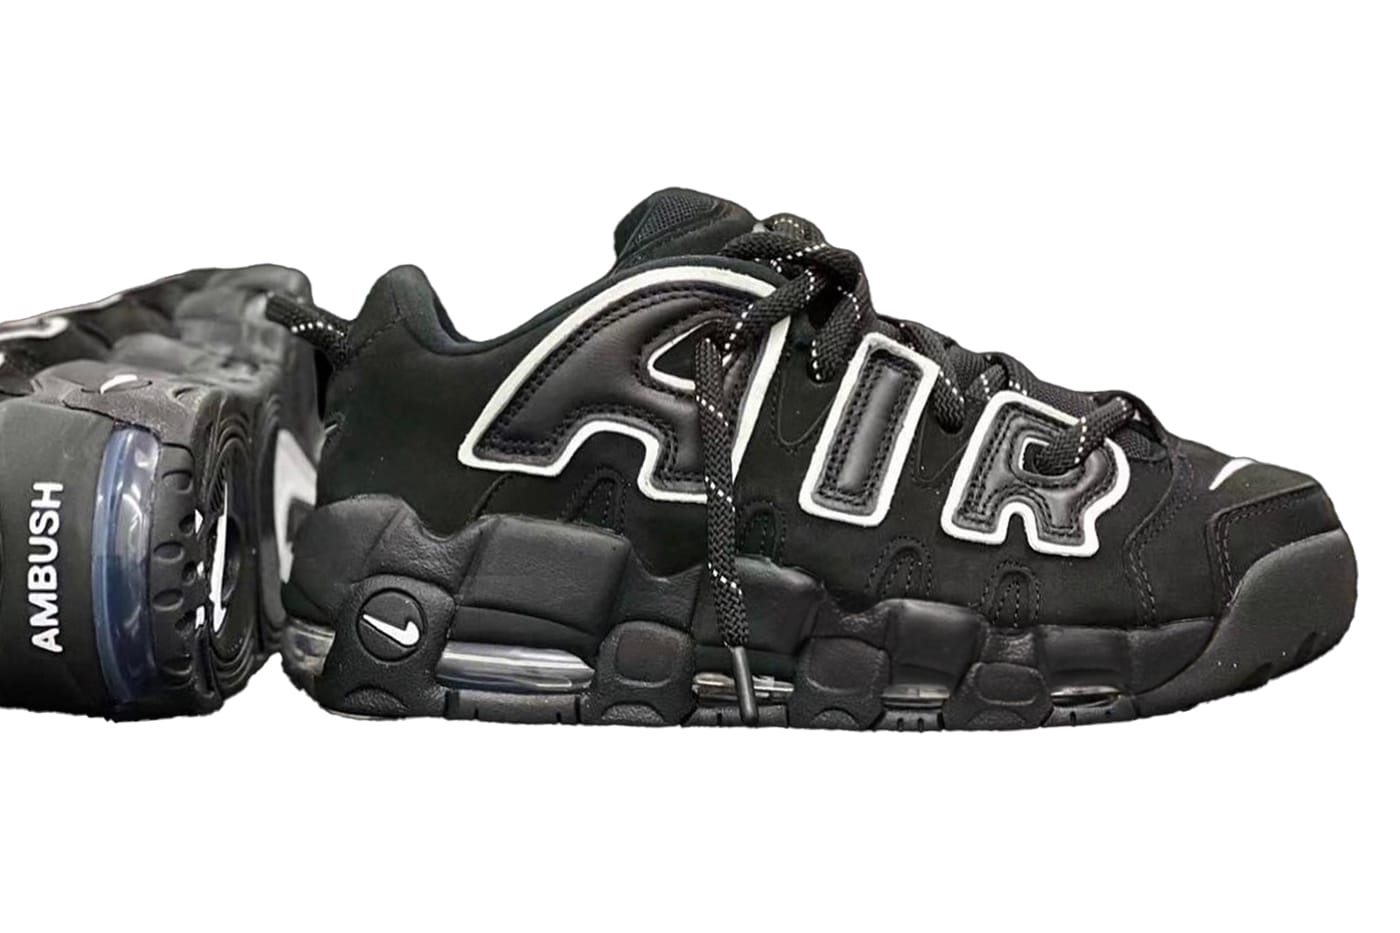 AMBUSH Nike Air More Uptempo Low Black FB1299-001 Info | Hypebeast